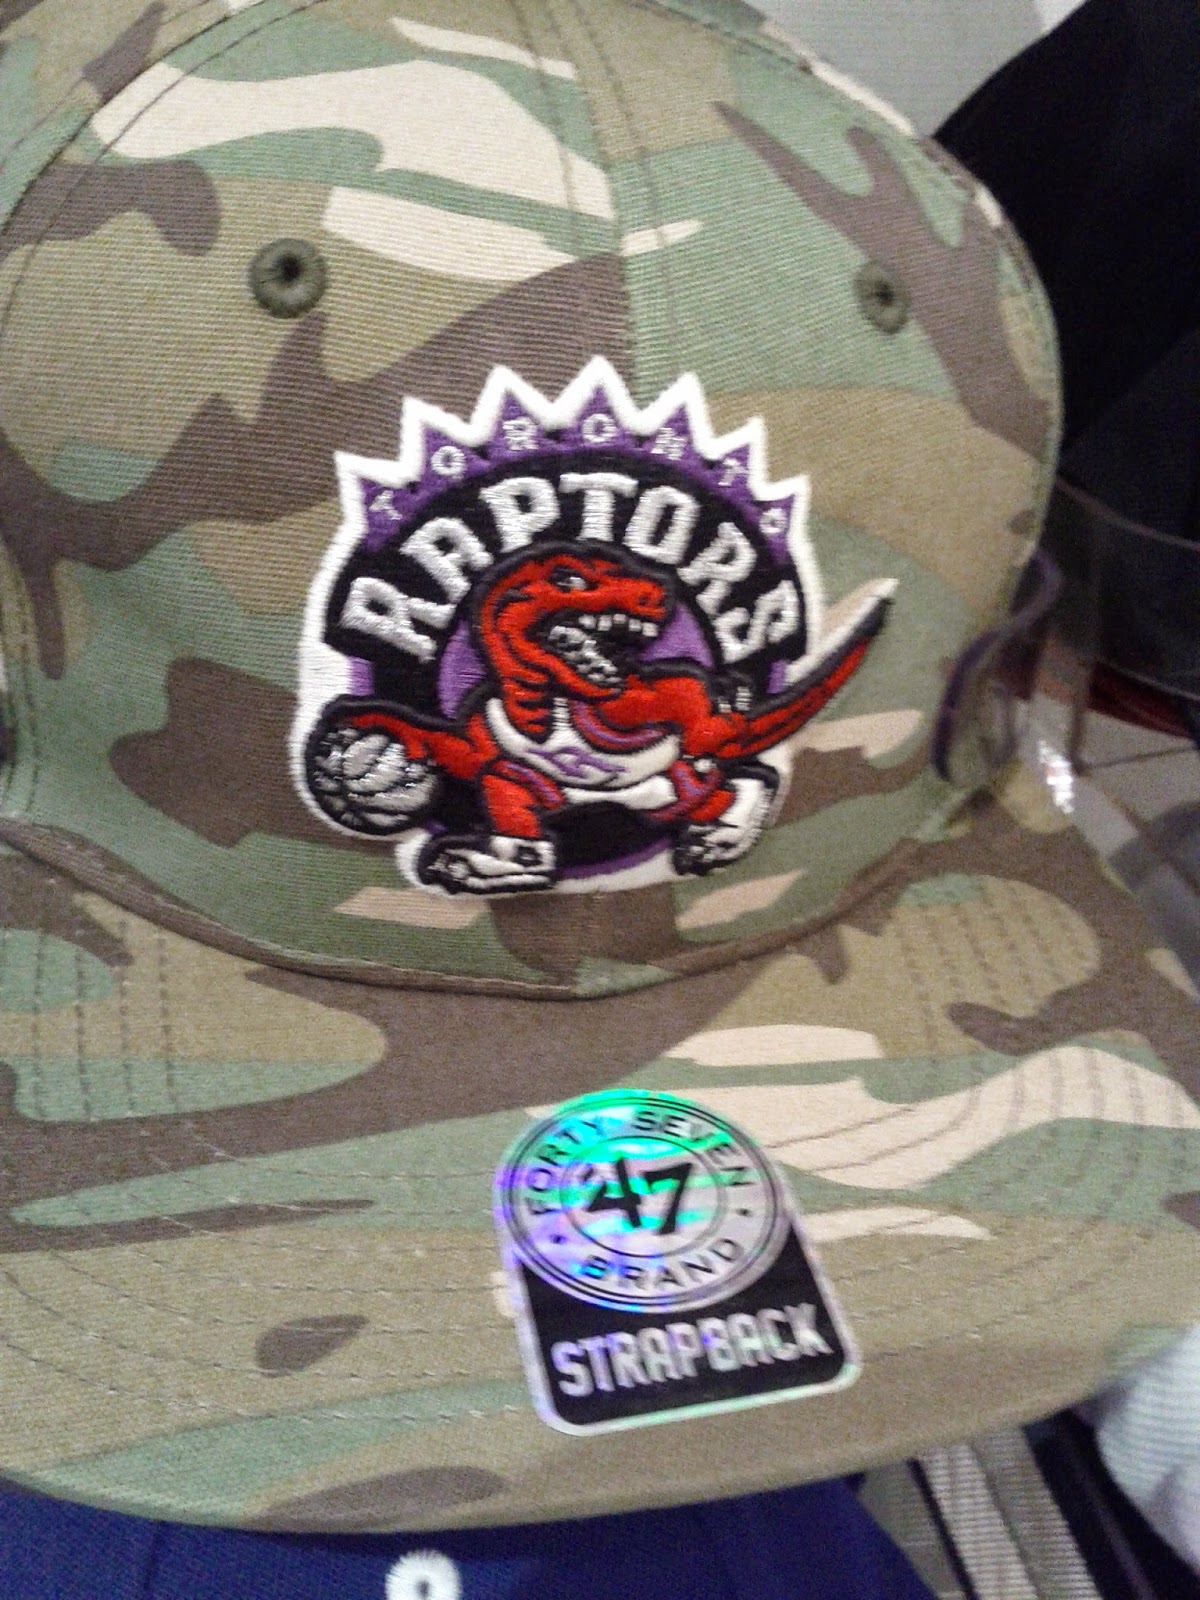 Toronto things: Toronto Raptors Camo hat